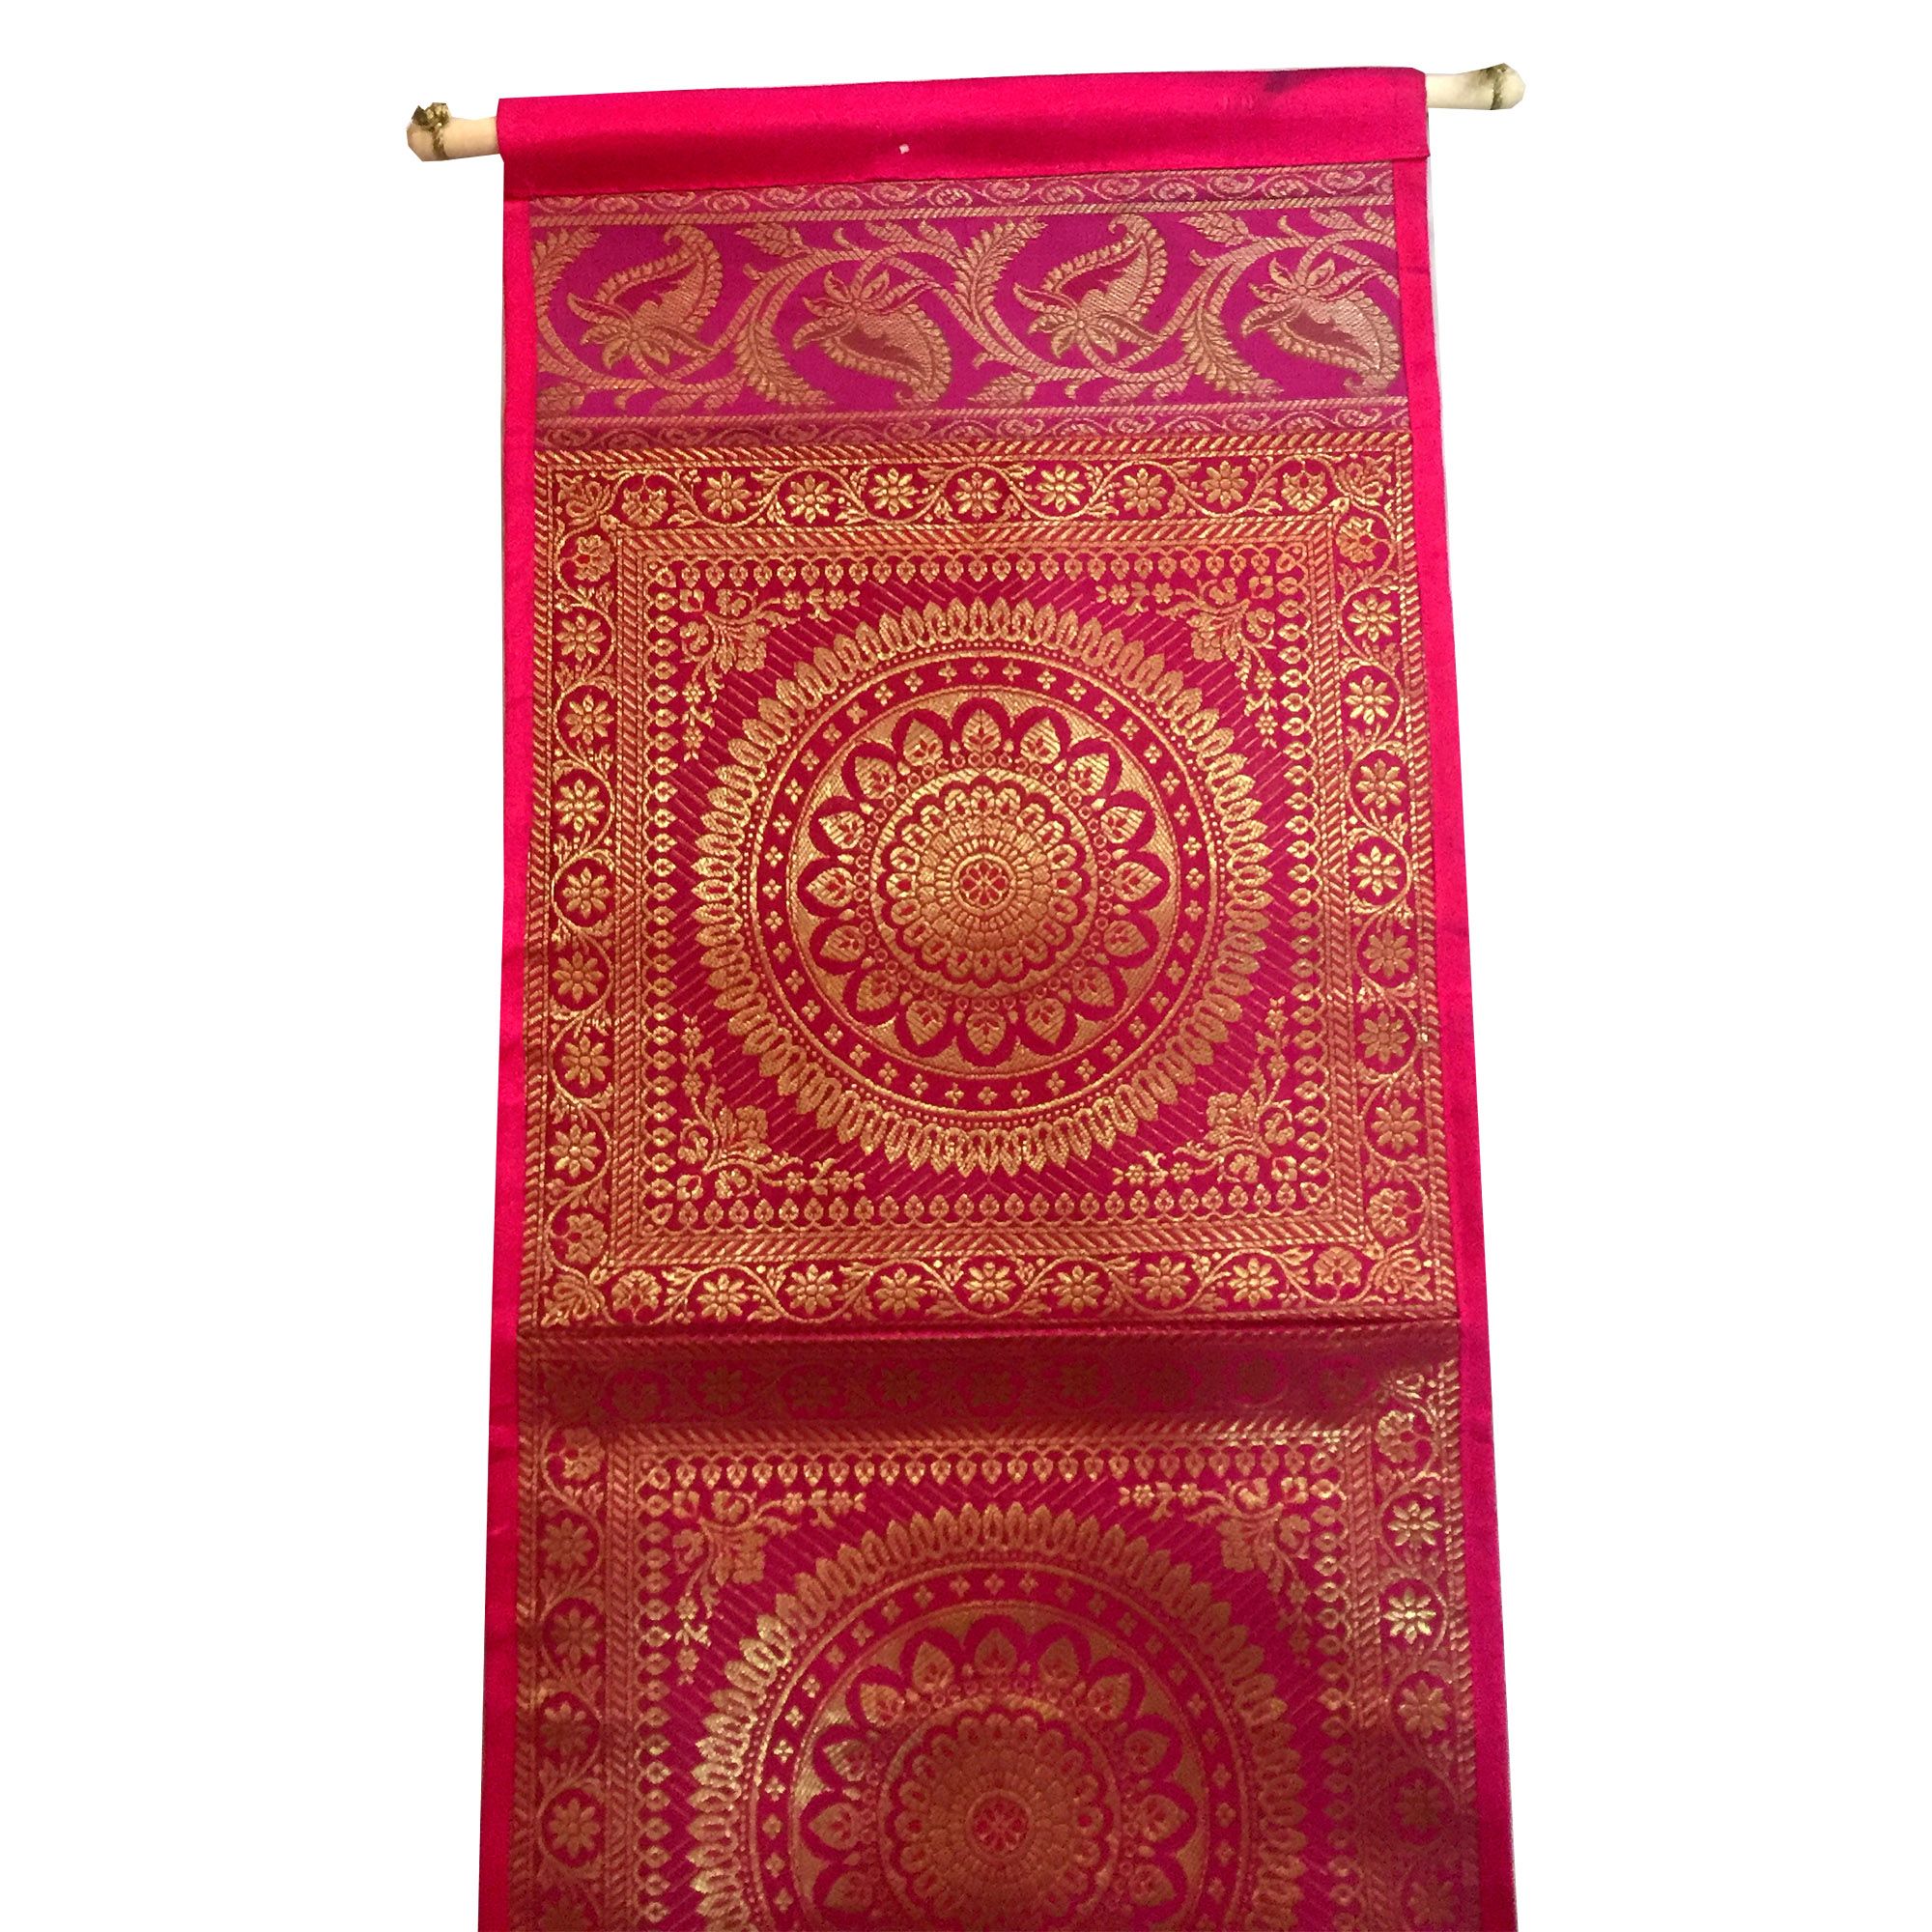 Traditional Brocade Work Rangoli Pattern Design Silk Wall Hanging in Pink